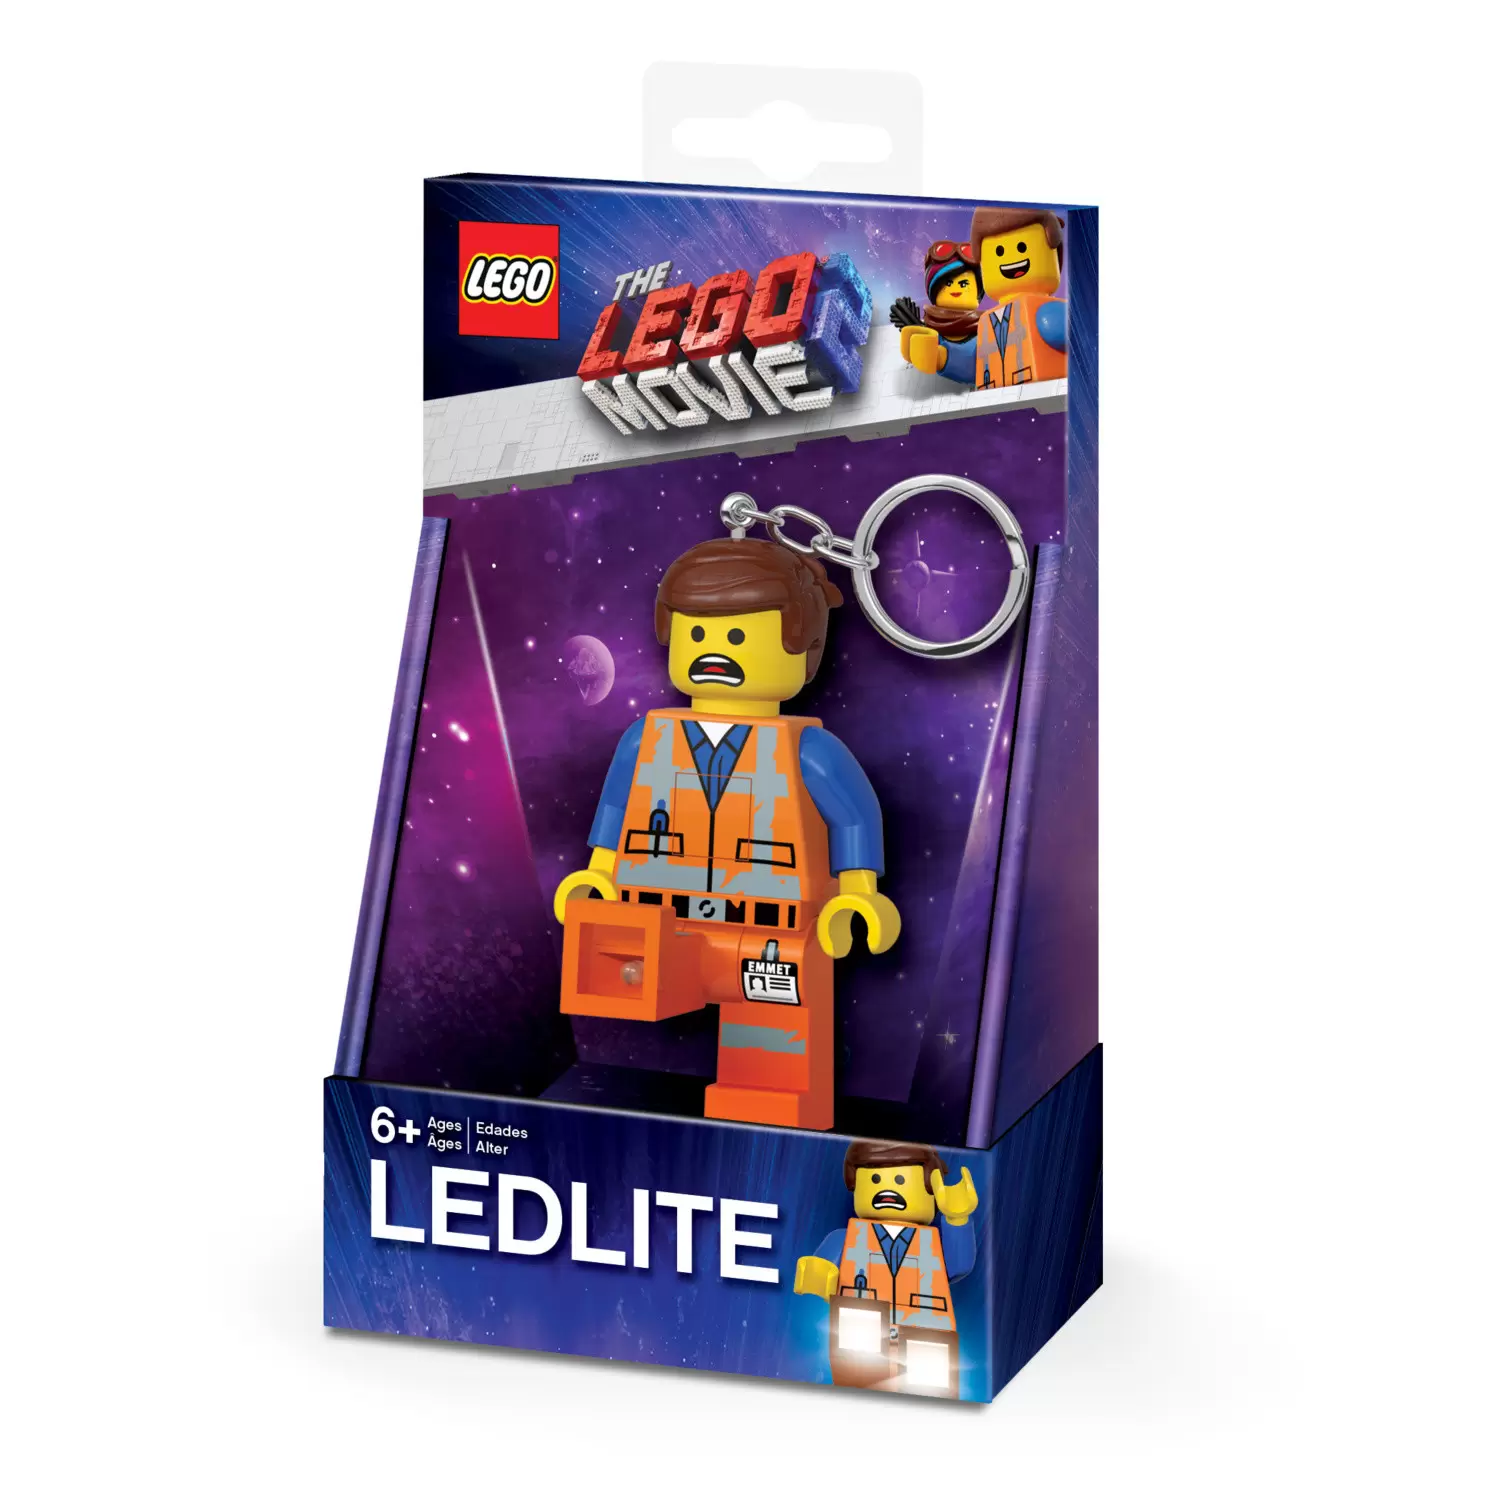 Porte-clés LEGO - LEGO Movie 2 - Emmet Ledlite